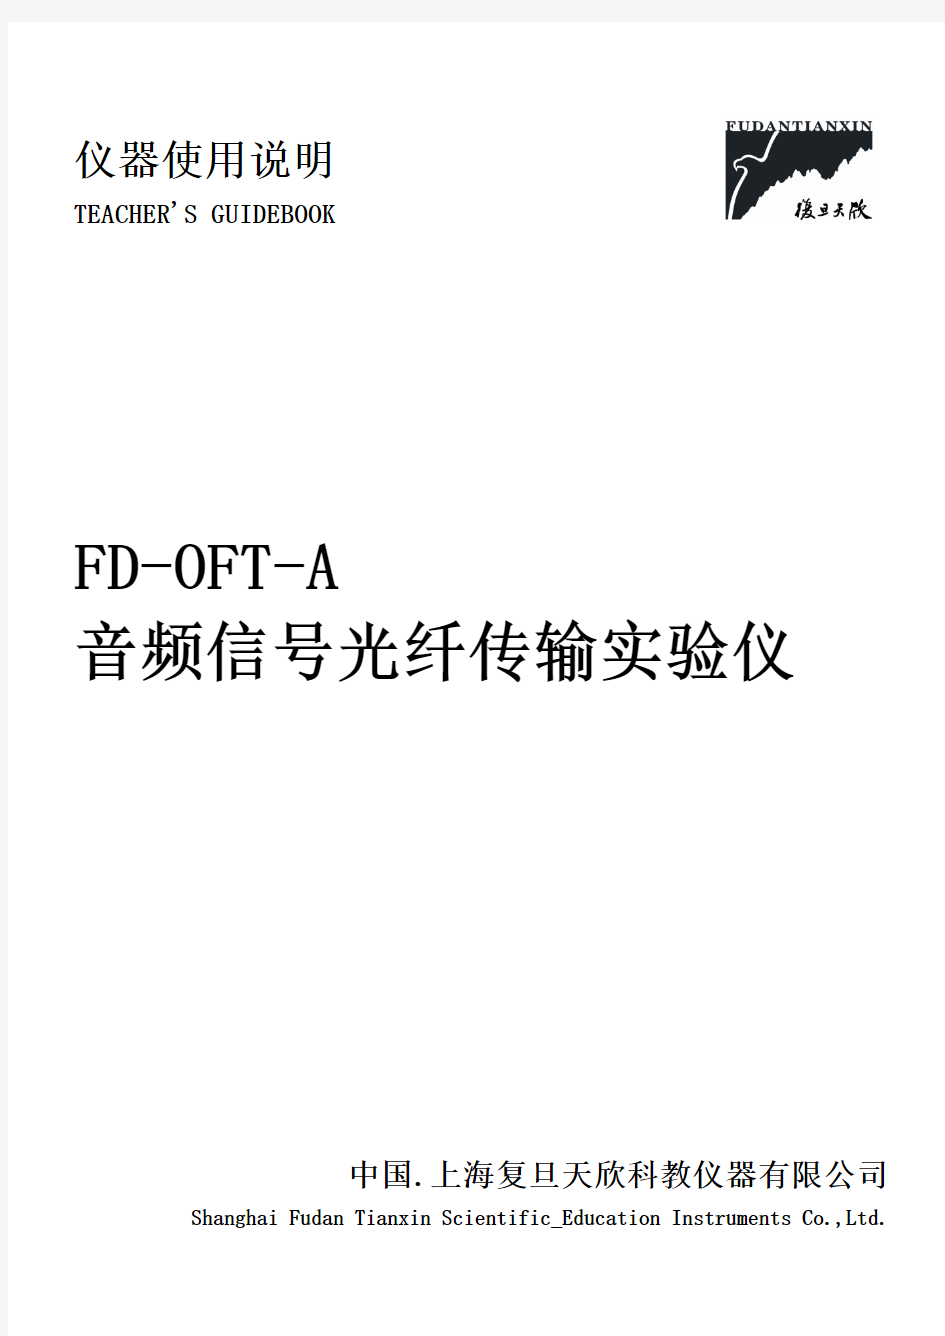 FD-OFT-A型音频信号光纤传输实验使用说明(070903)资料